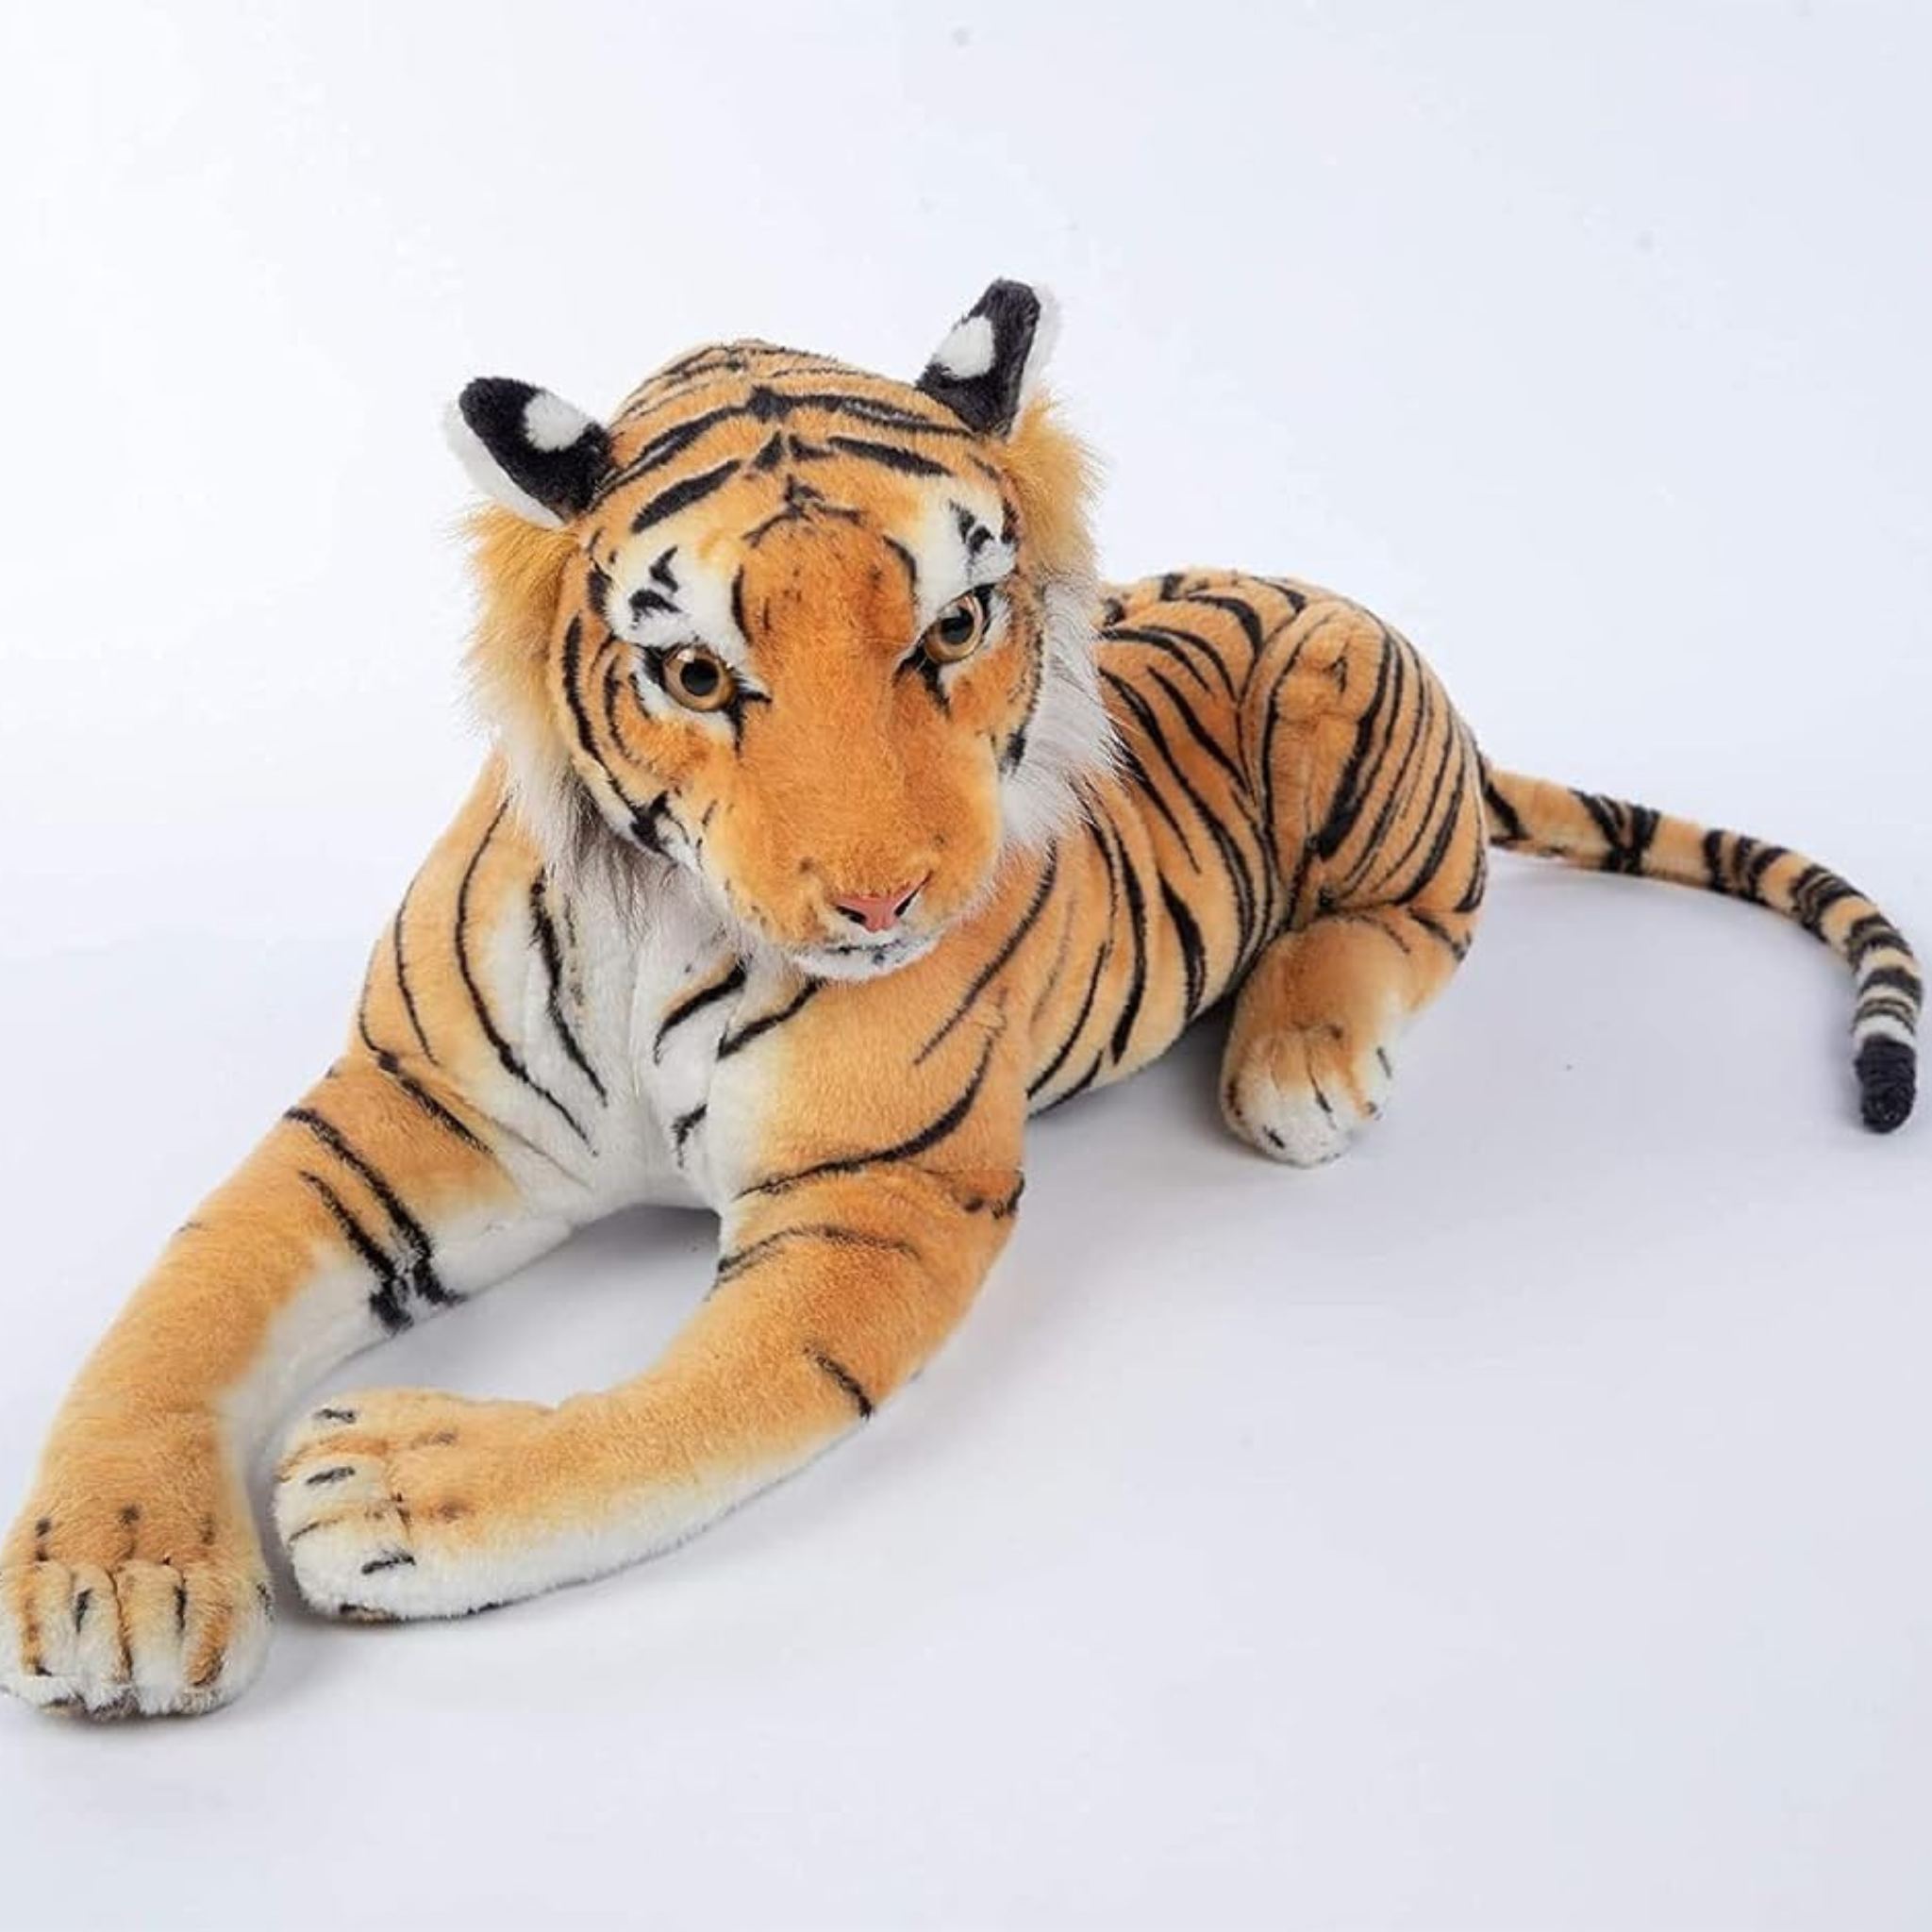 Large Soft Plush Wild Tiger